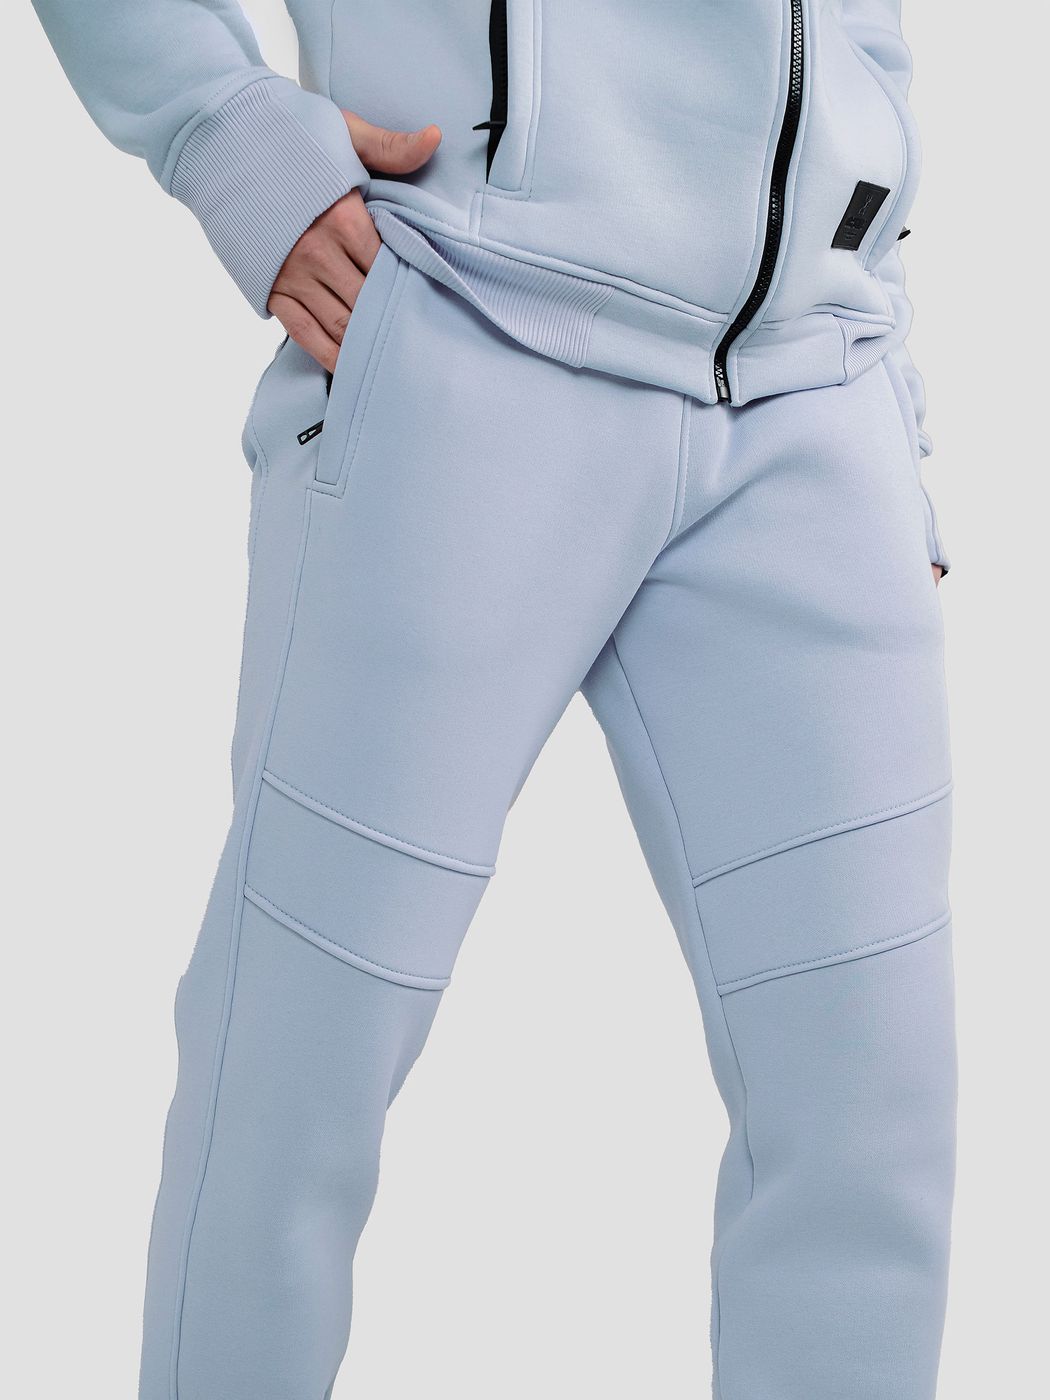 Men's tracksuit set Hoodie with a zipper and Pants Light Blue, світло-блакитний, M-L, L (108 cm)